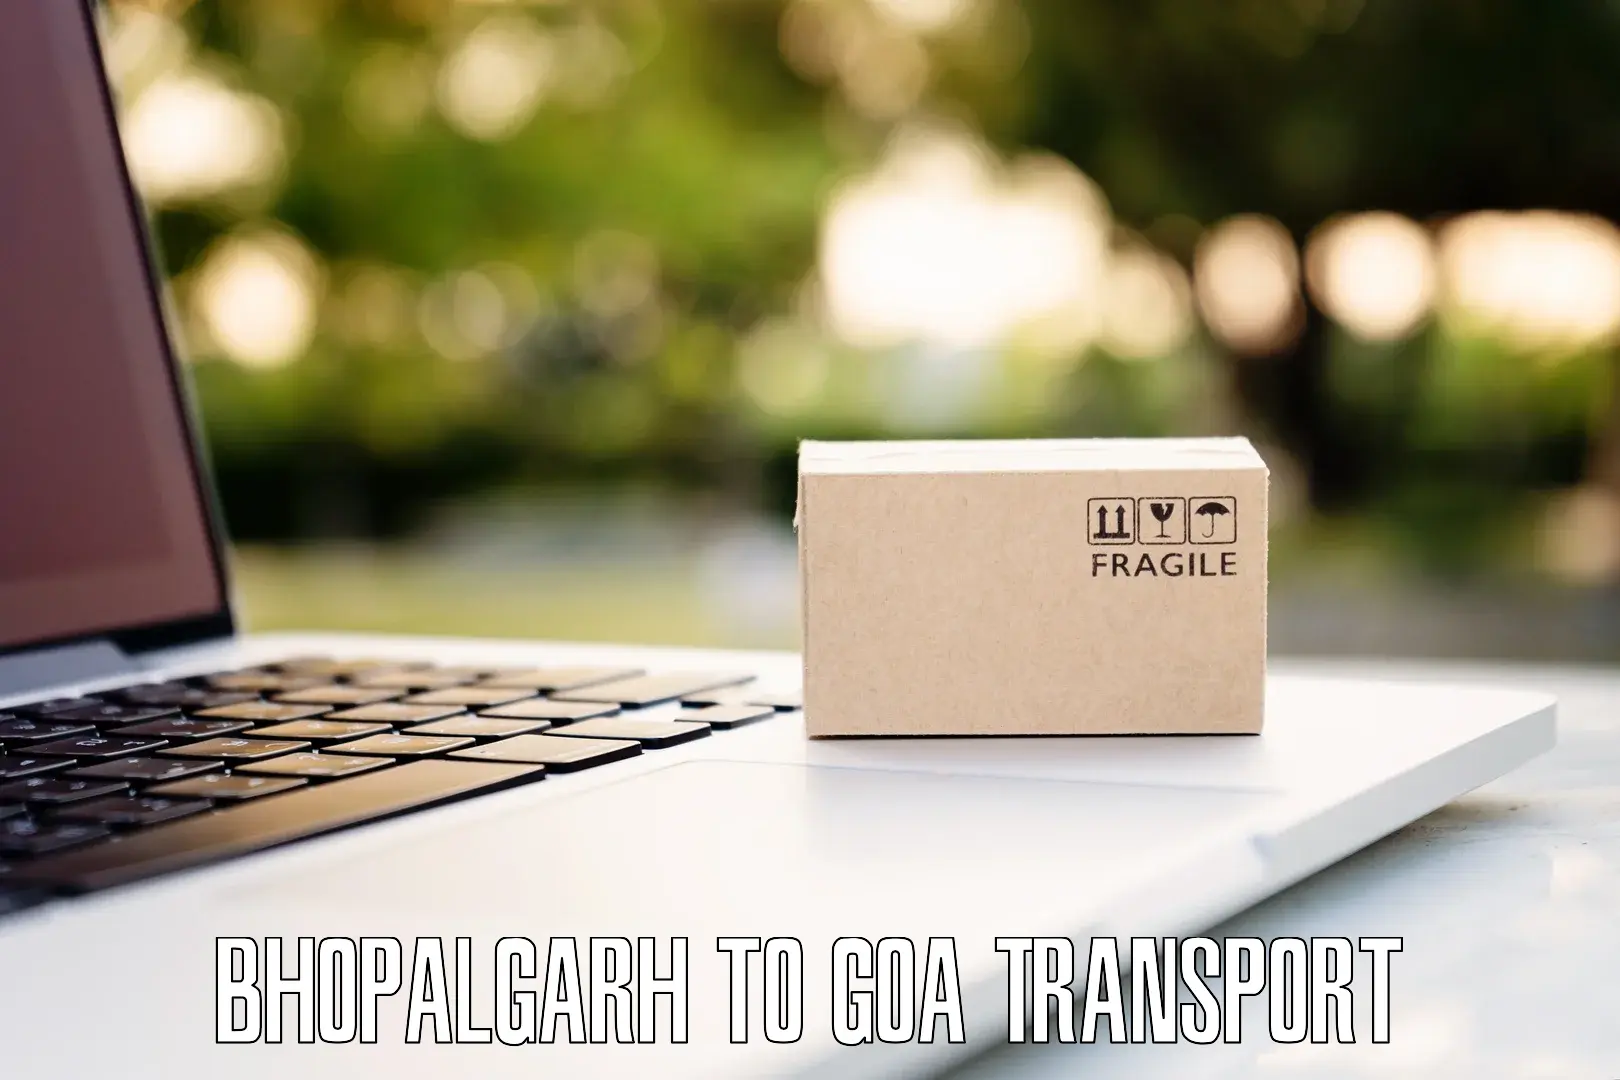 Transport in sharing Bhopalgarh to Goa